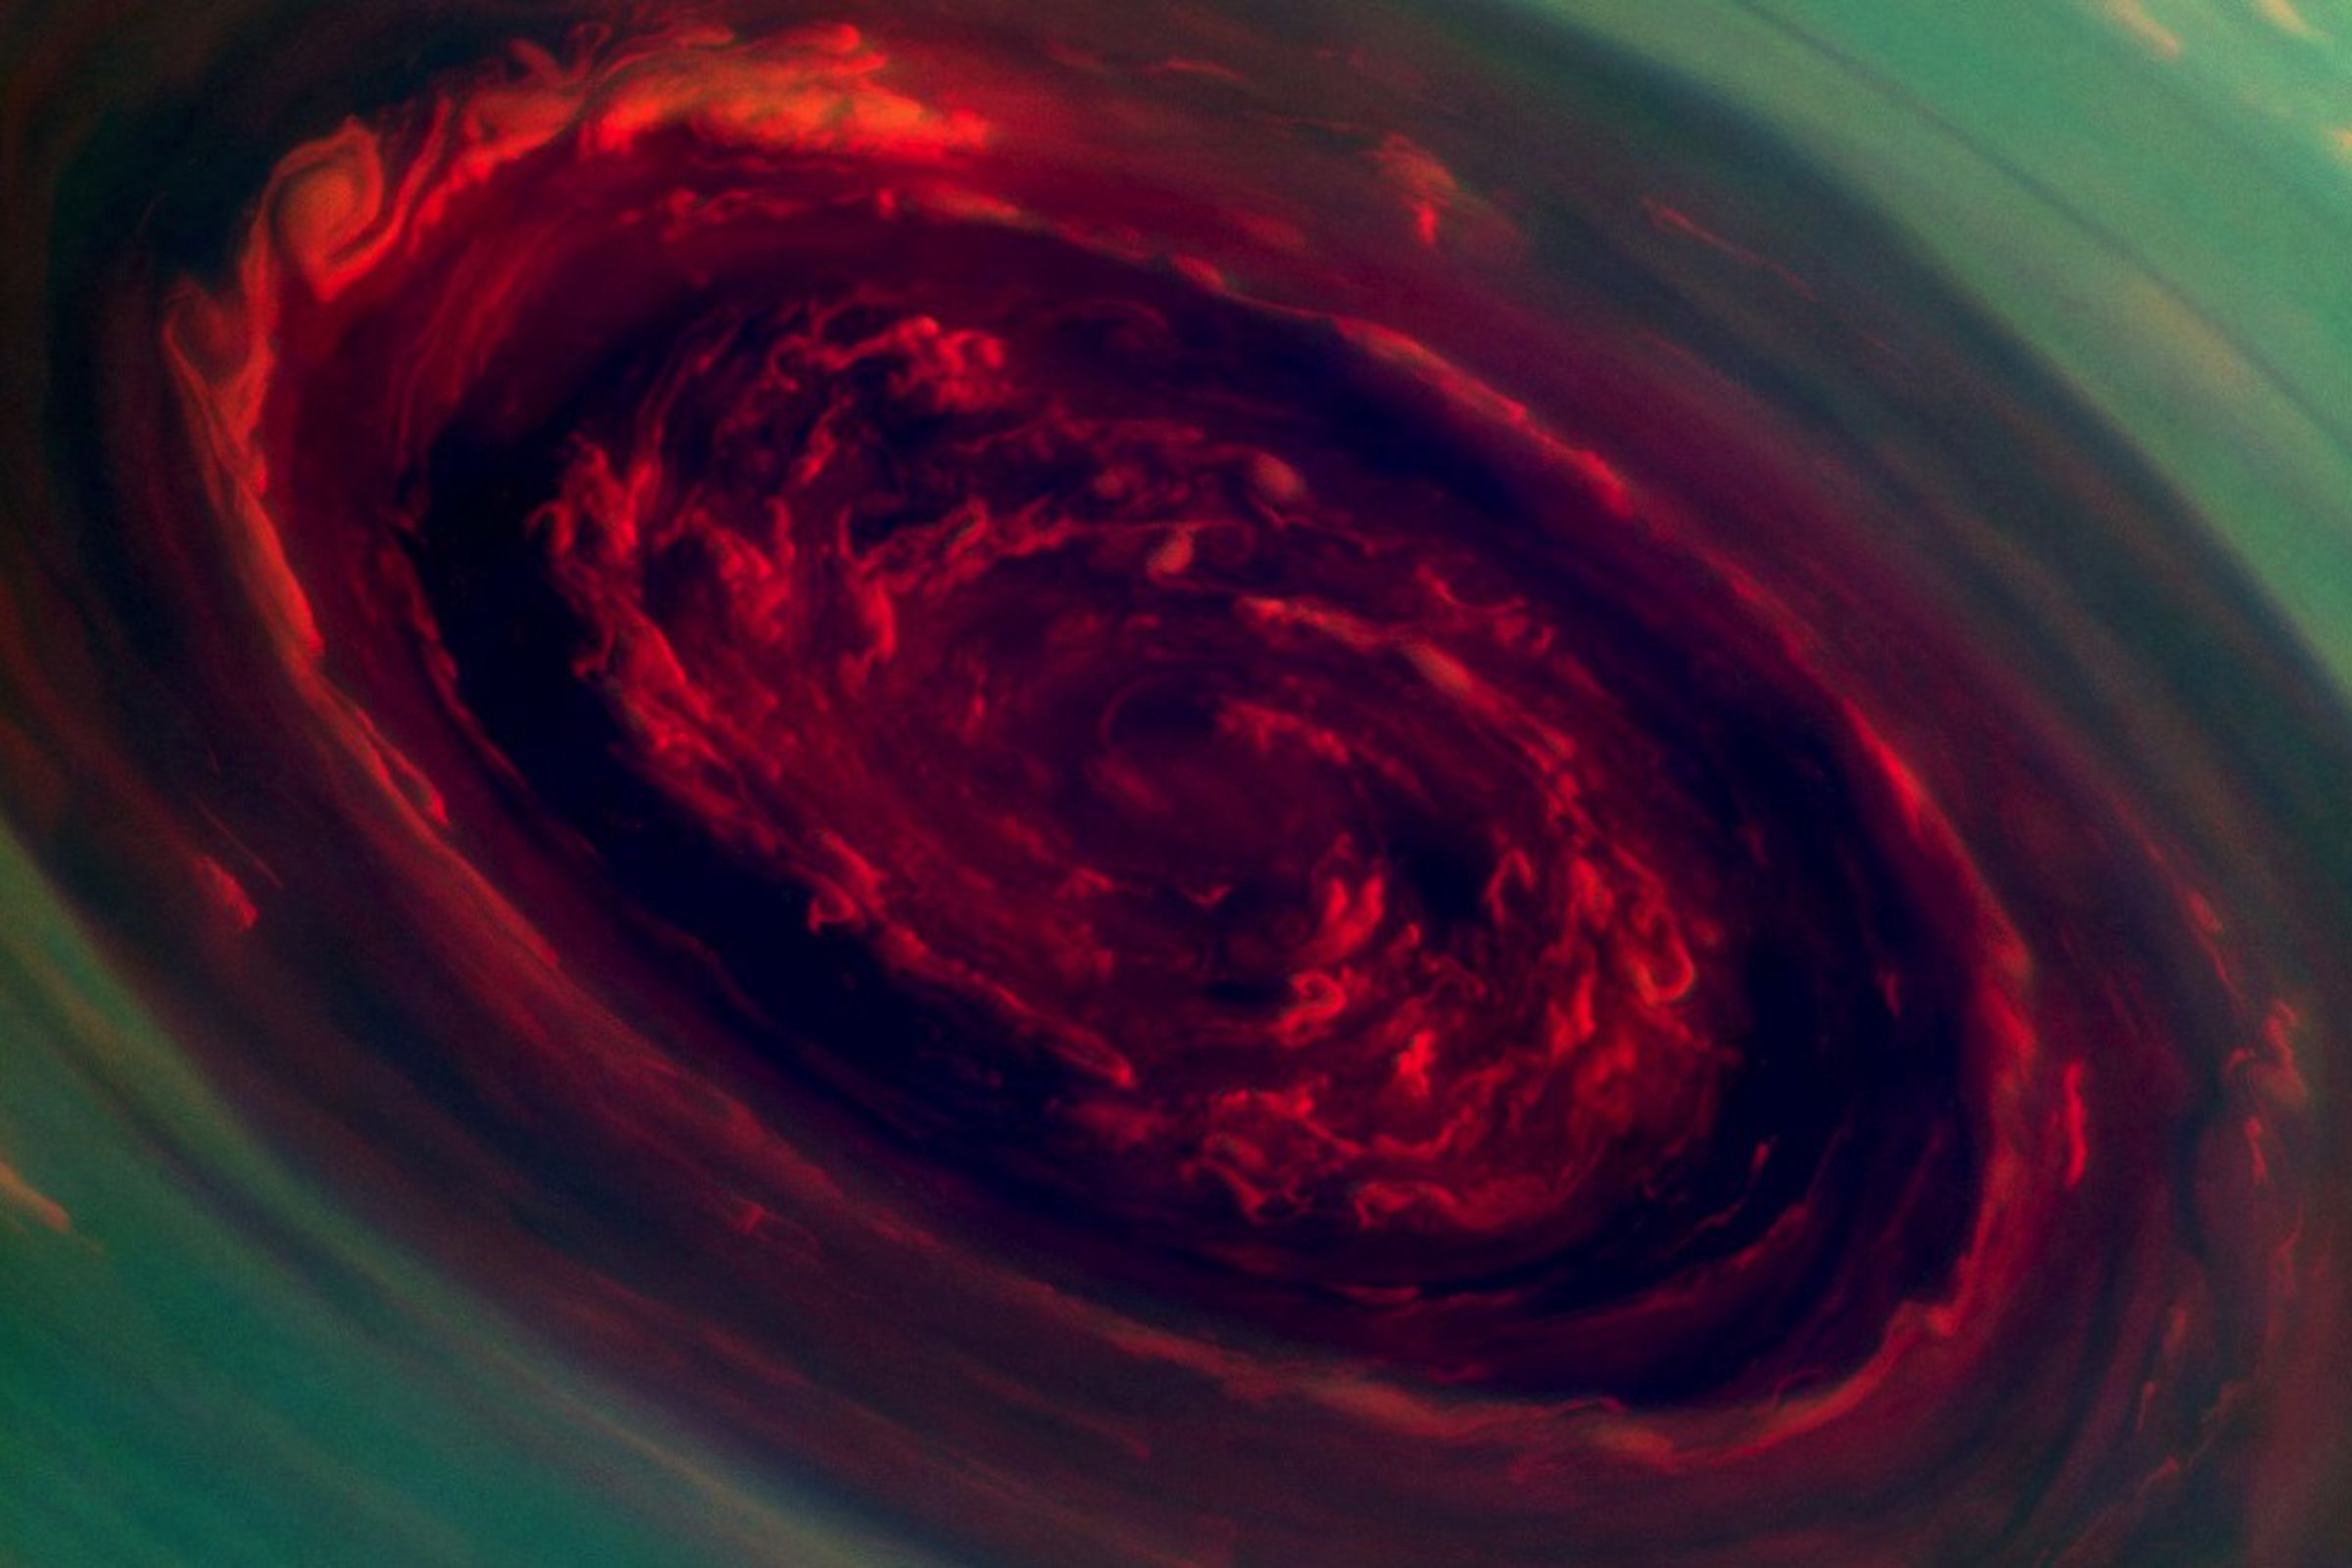 NASA Cassini Saturn storm image (Credit: NASA/JPL-Caltech/SSI)